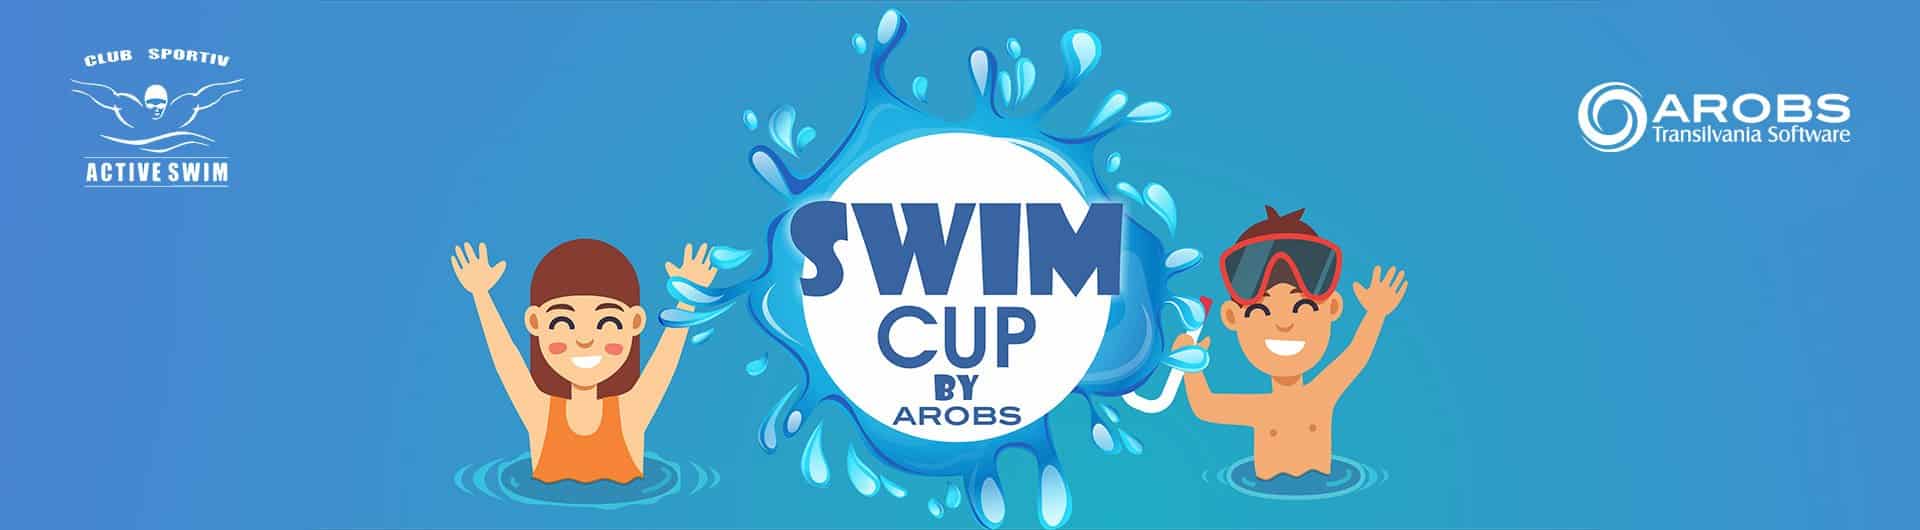 swimCup arobs